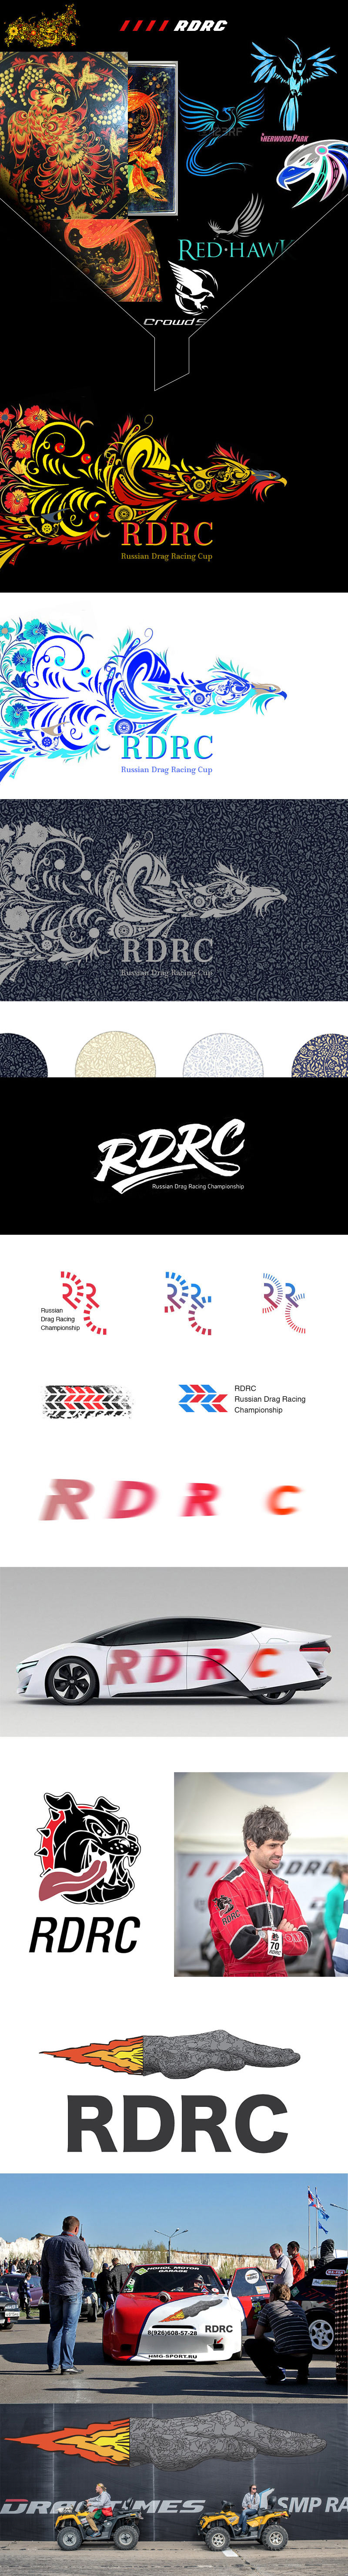 rdrc process 02